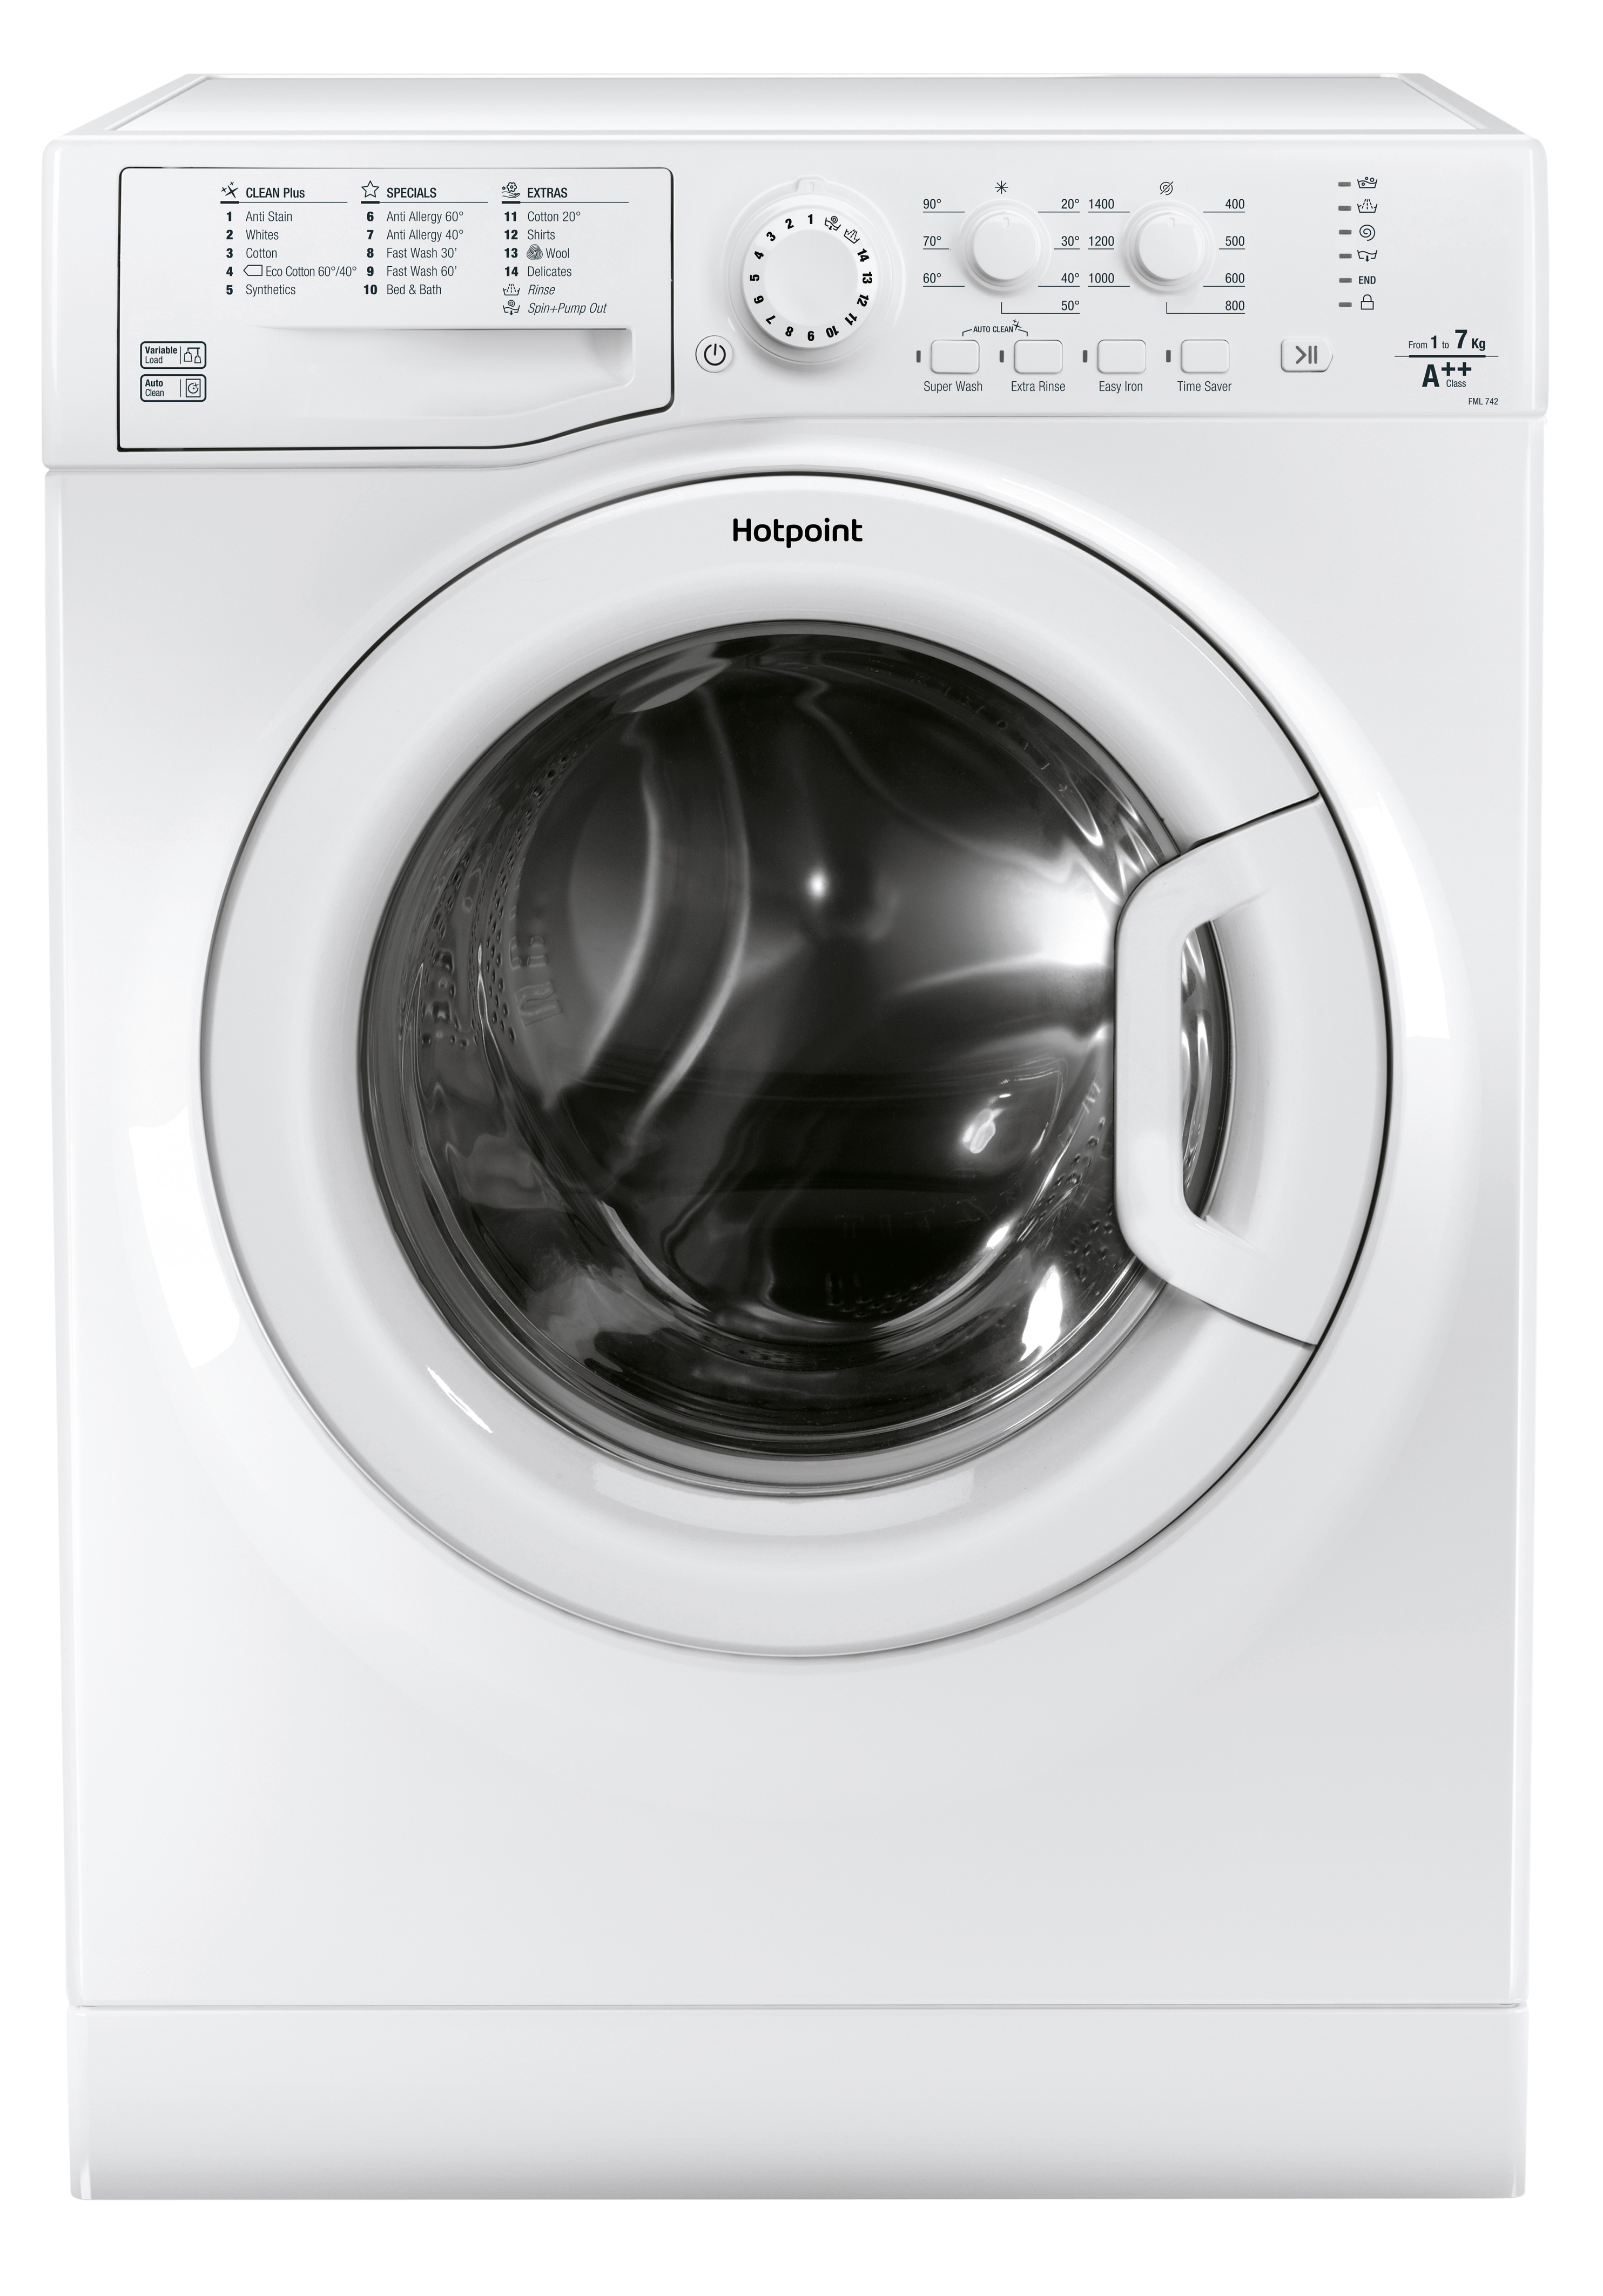 whirlpool washing machine serial number coding